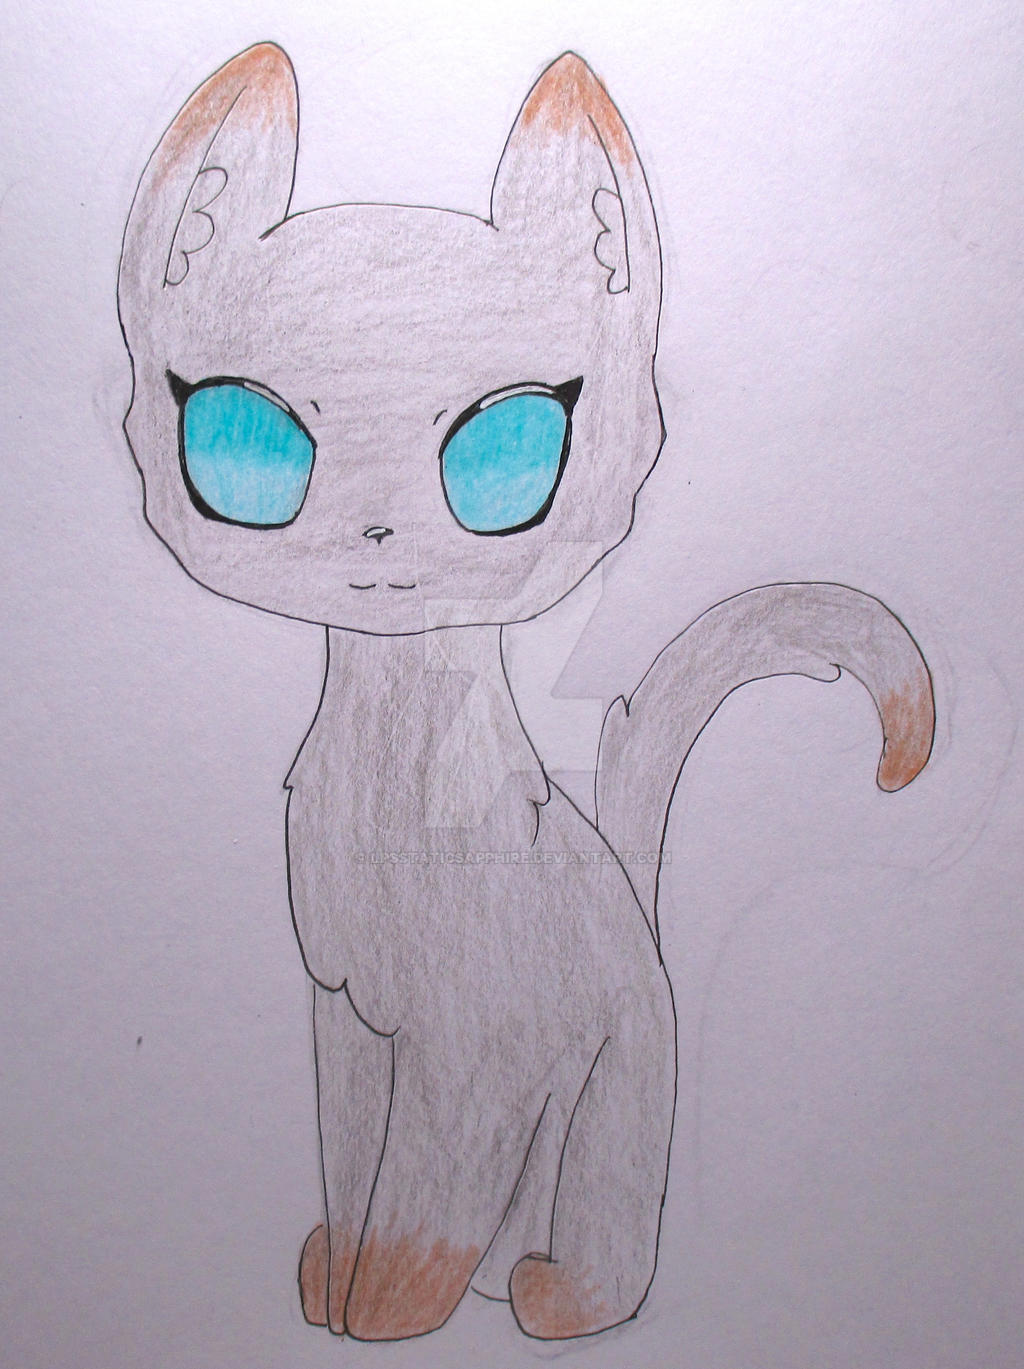 Lps Shorthair Cat #391 by LpsStaticSapphire on DeviantArt